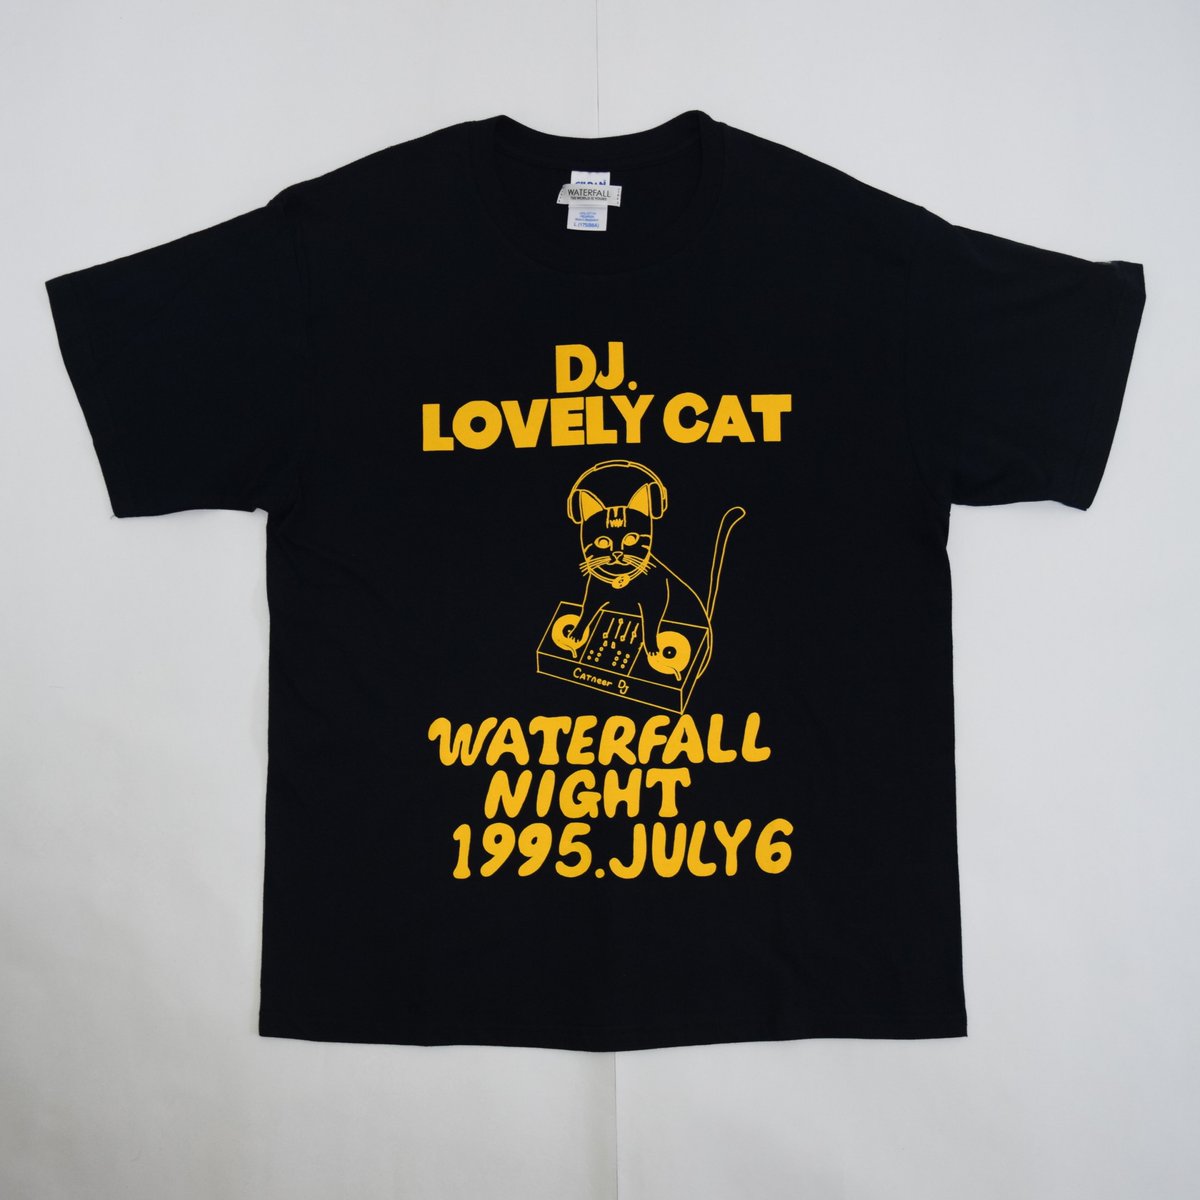 Waterfall Official Dj猫は人気者 クラブミュージック好きな方に好評頂いています 女性にはsサイズが人気 猫ツアーt Dj猫 T Co Nra5ywmpcv 猫バンド T Co Zavg0o7uys Dj 猫 ねこ ネコ クラブ Edm T Co